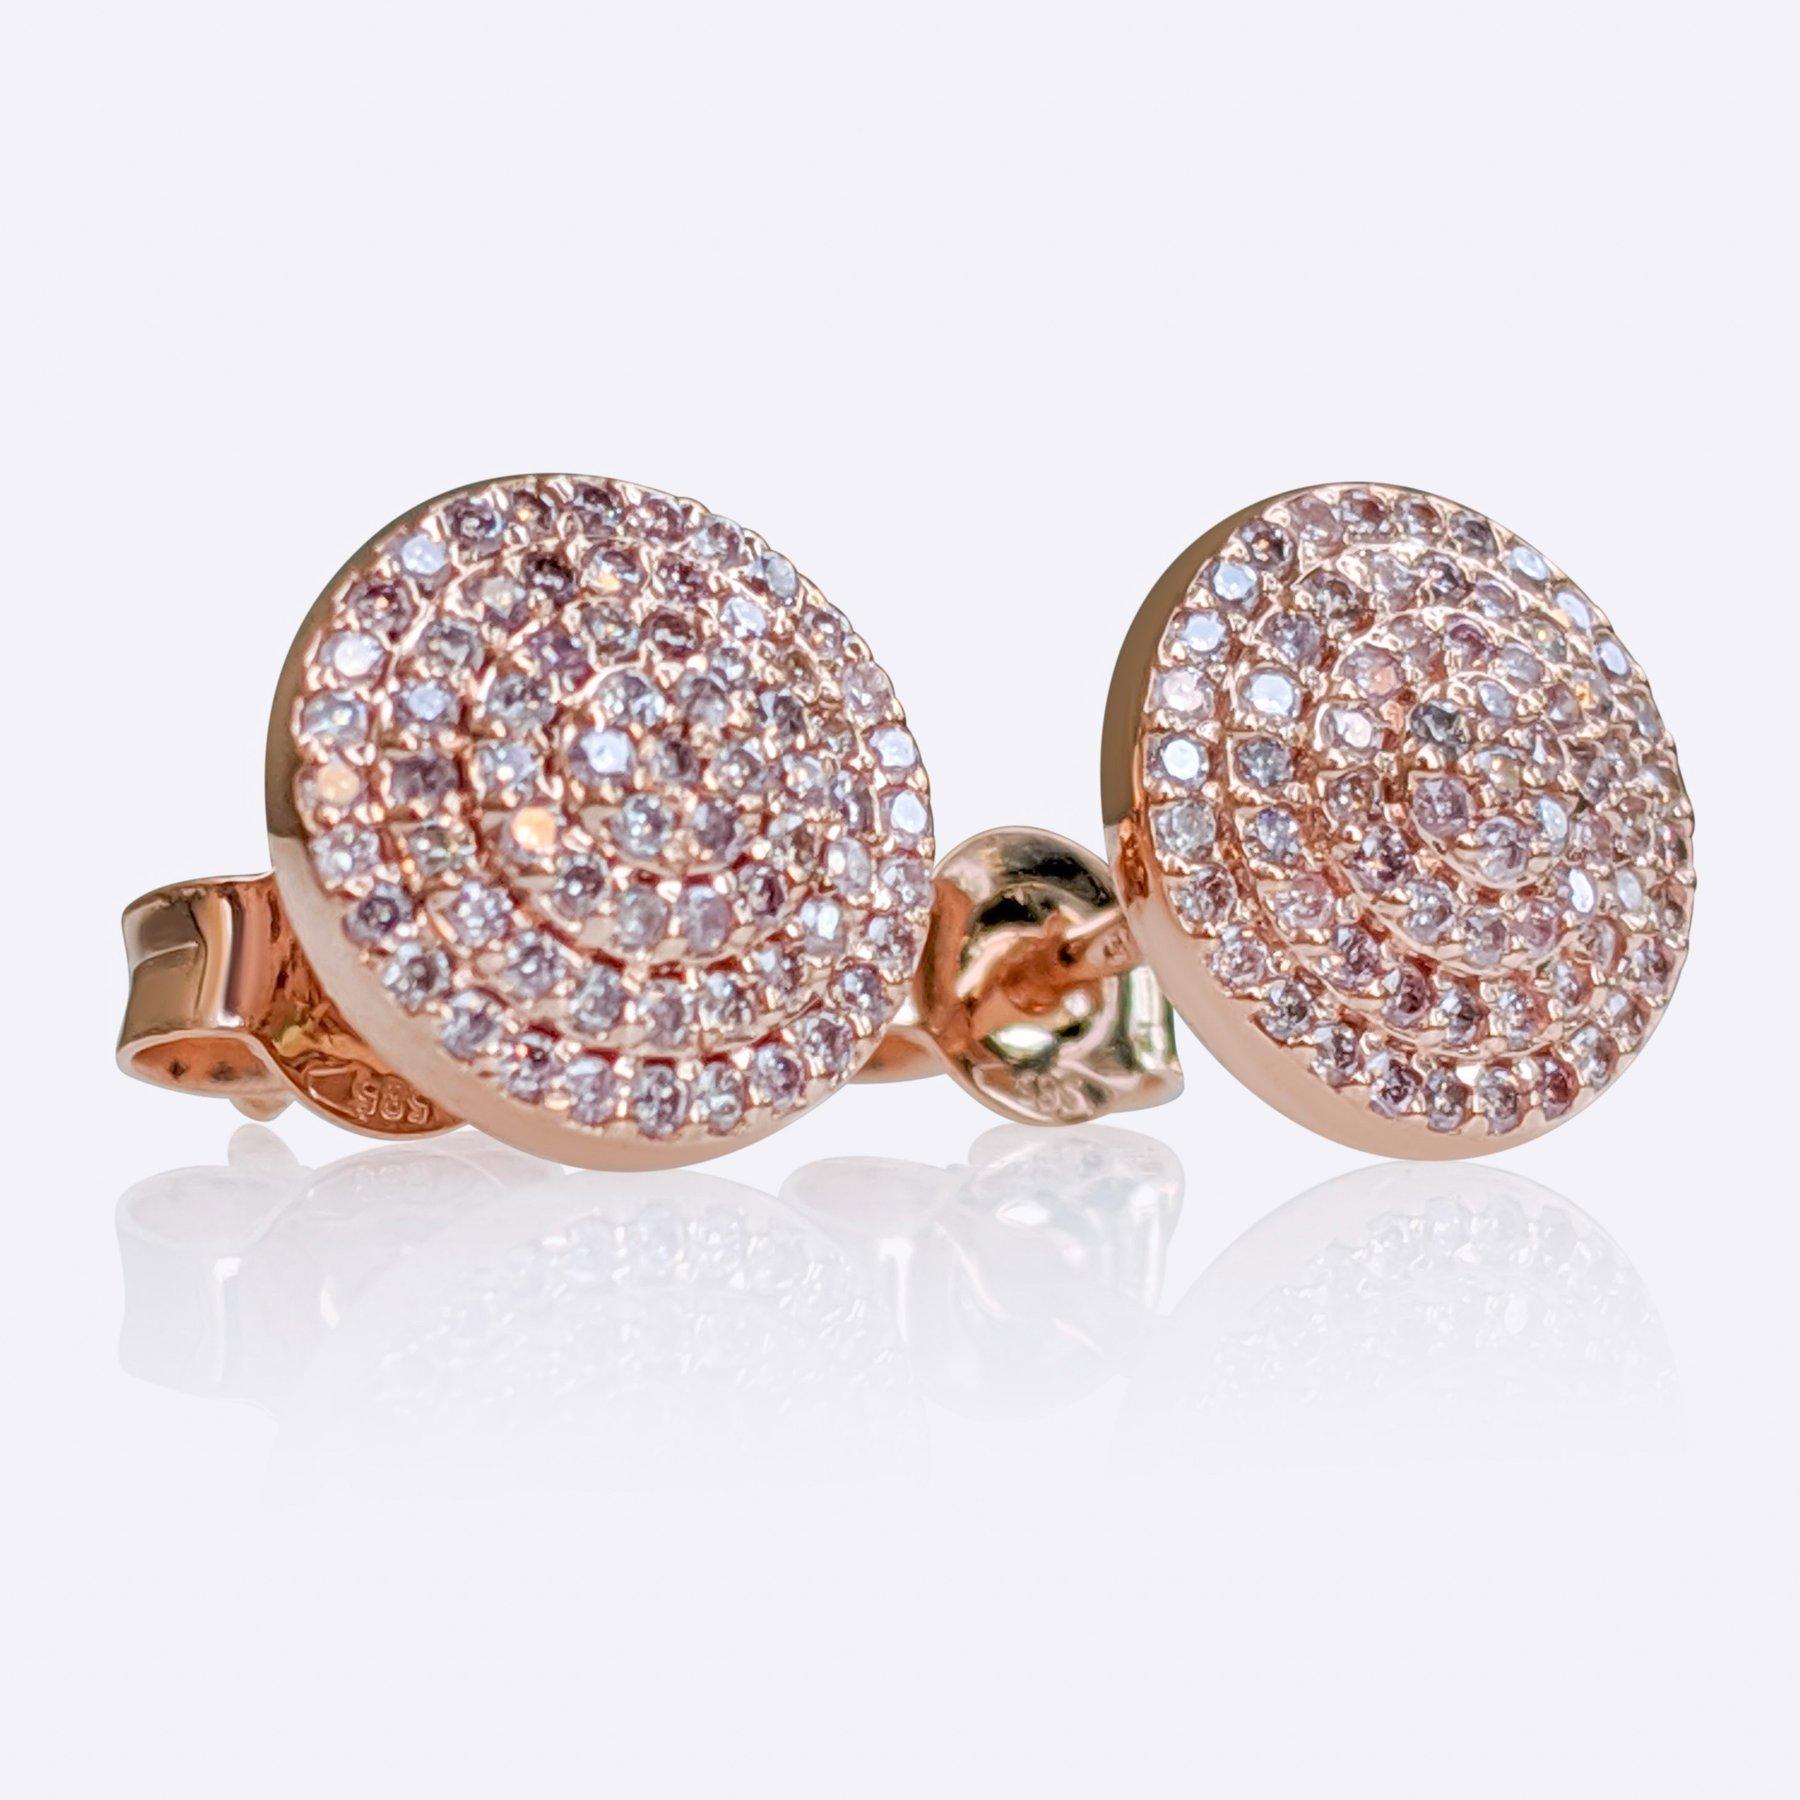 Round Cut NO RESERVE! 0.30 Carat Fancy Pink Diamond - 14 kt. Pink gold - Earrings